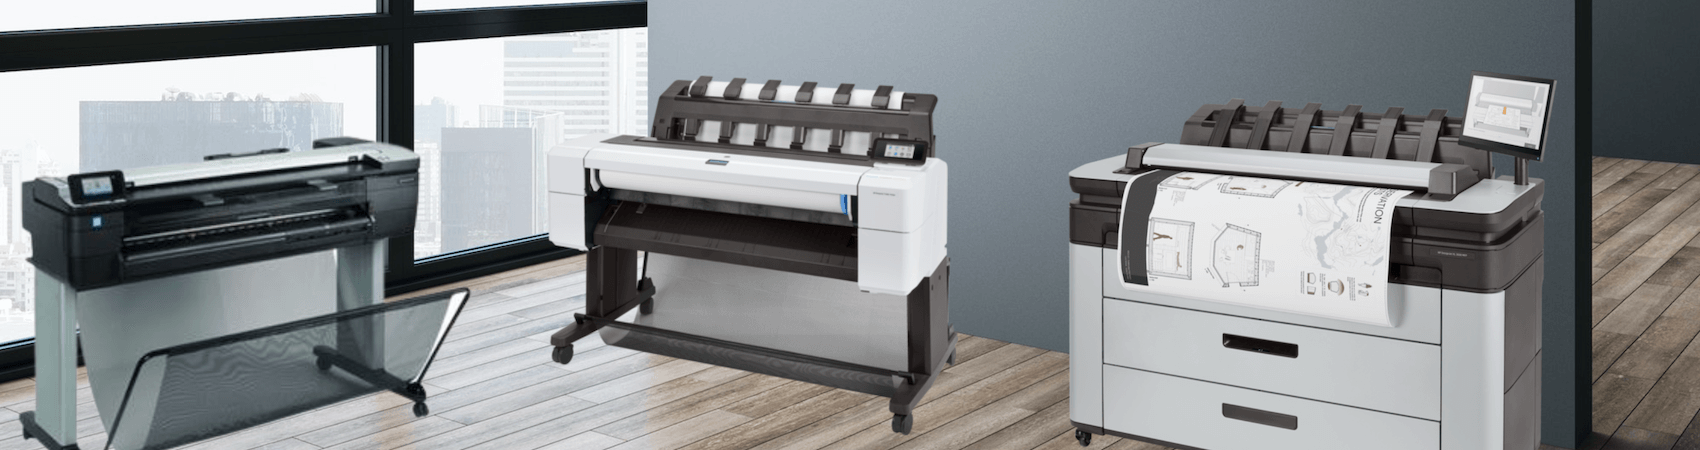 Compact HP DesignJet Printer